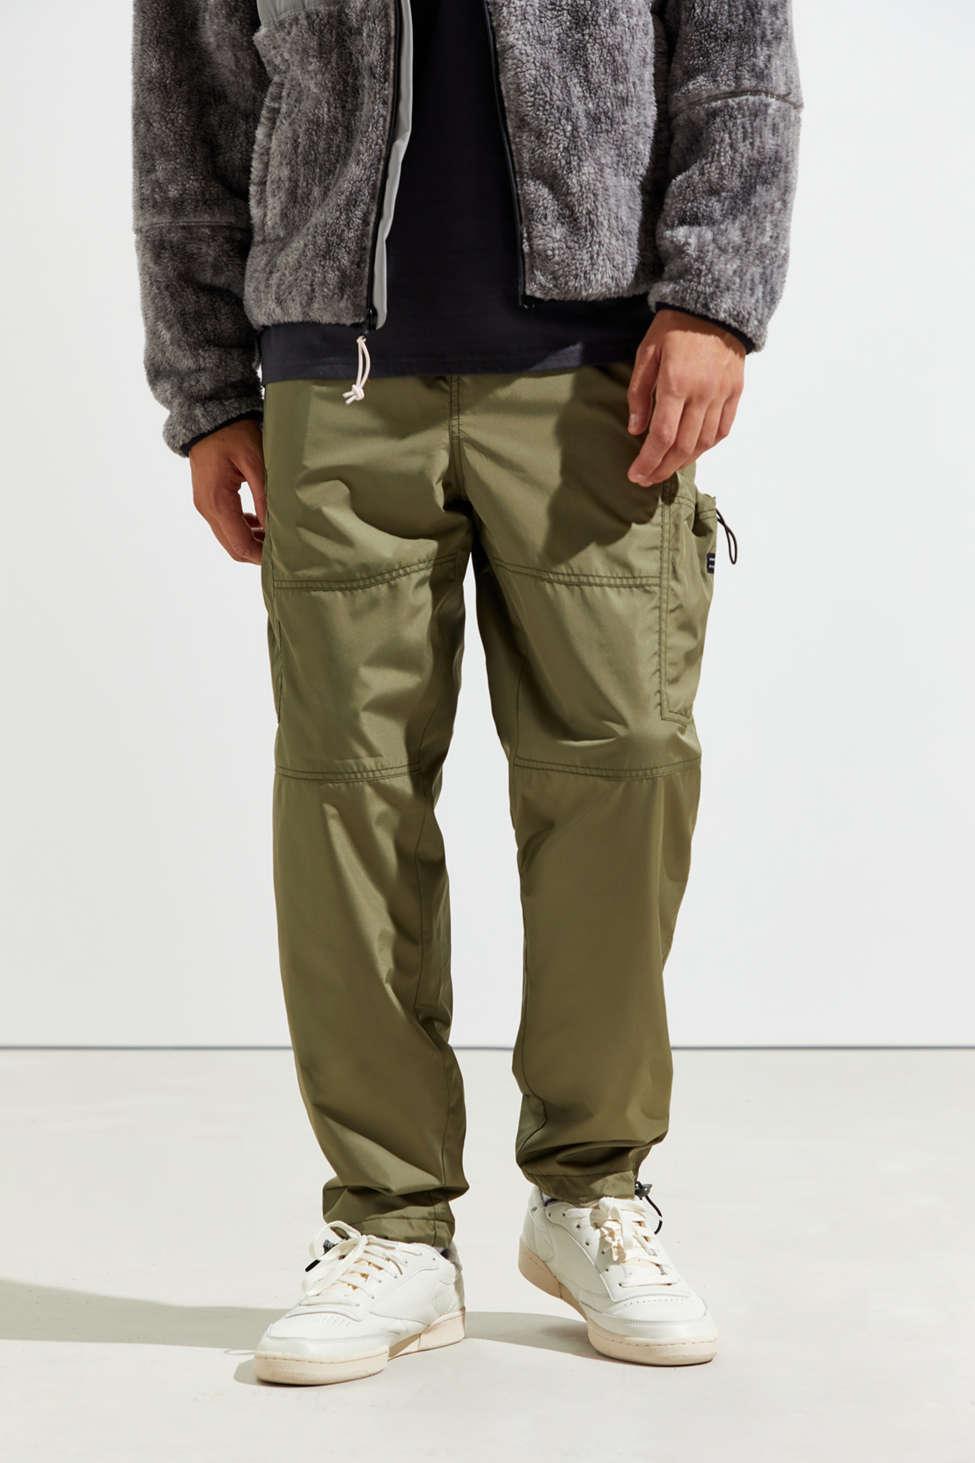 BDG Urban Outfitters PANTS - Cargo trousers - stone/sand - Zalando.de